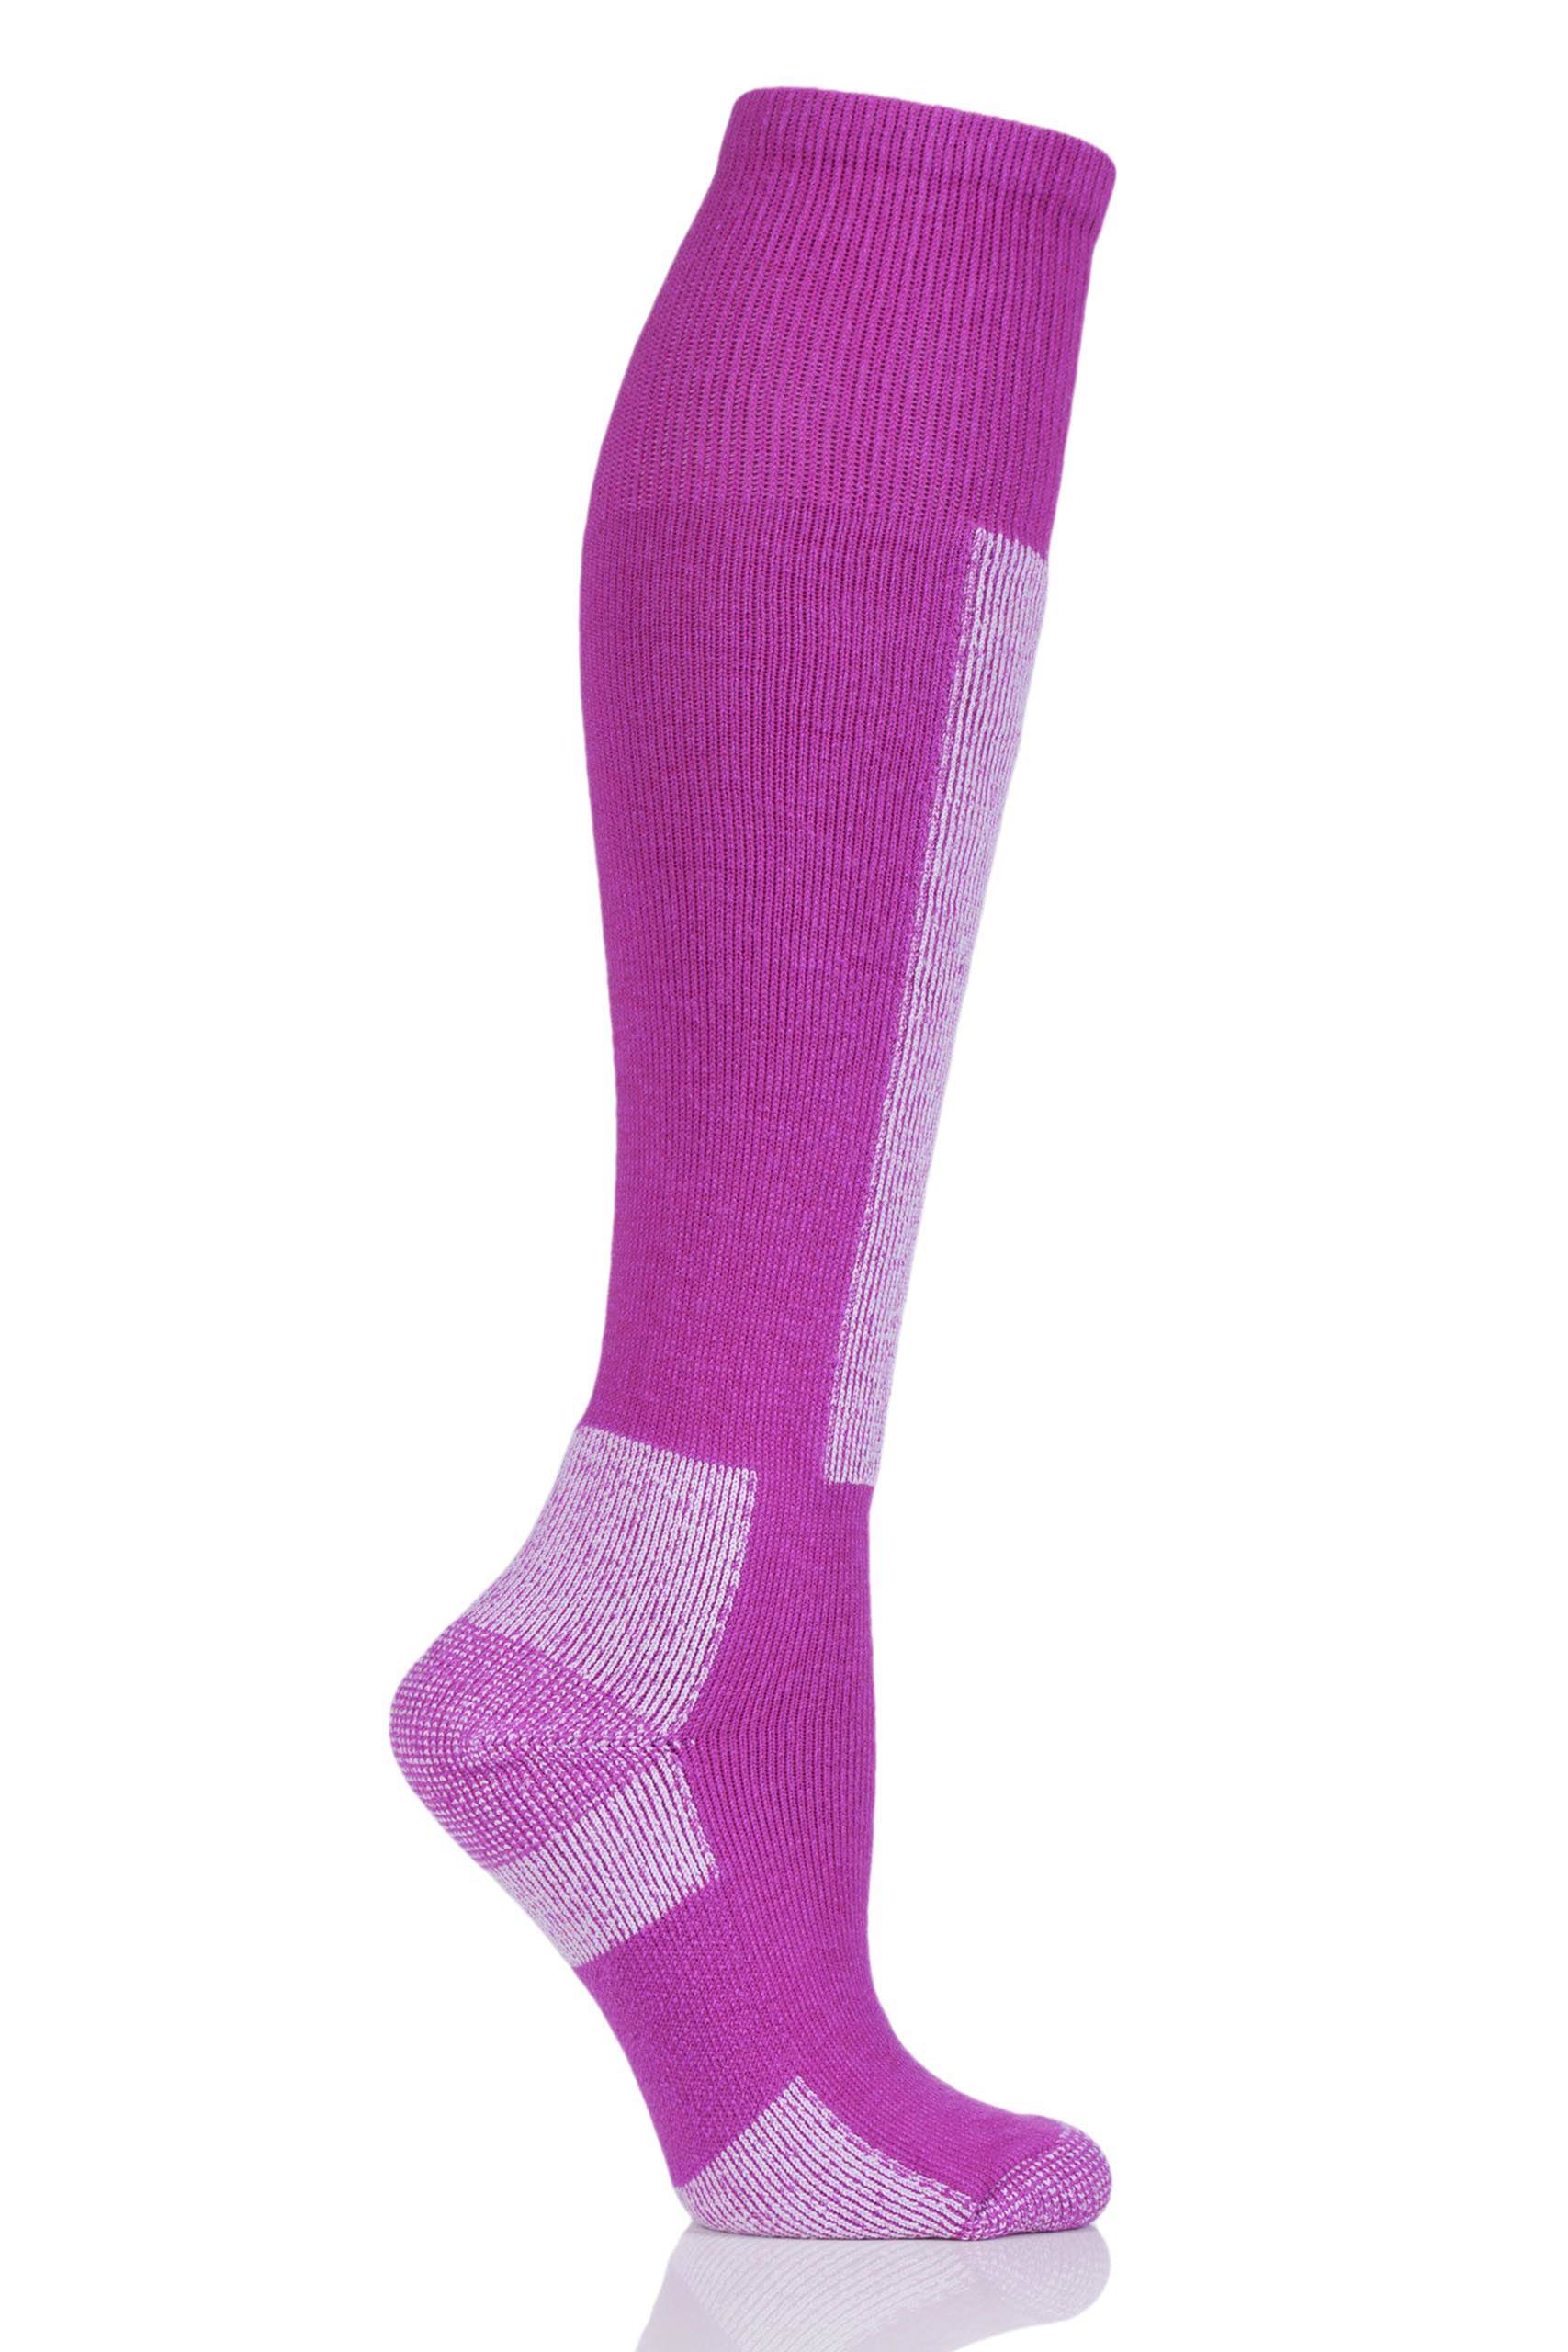 Thorlo Lightweight Ski Socks - AW18 Purple UK 5-8